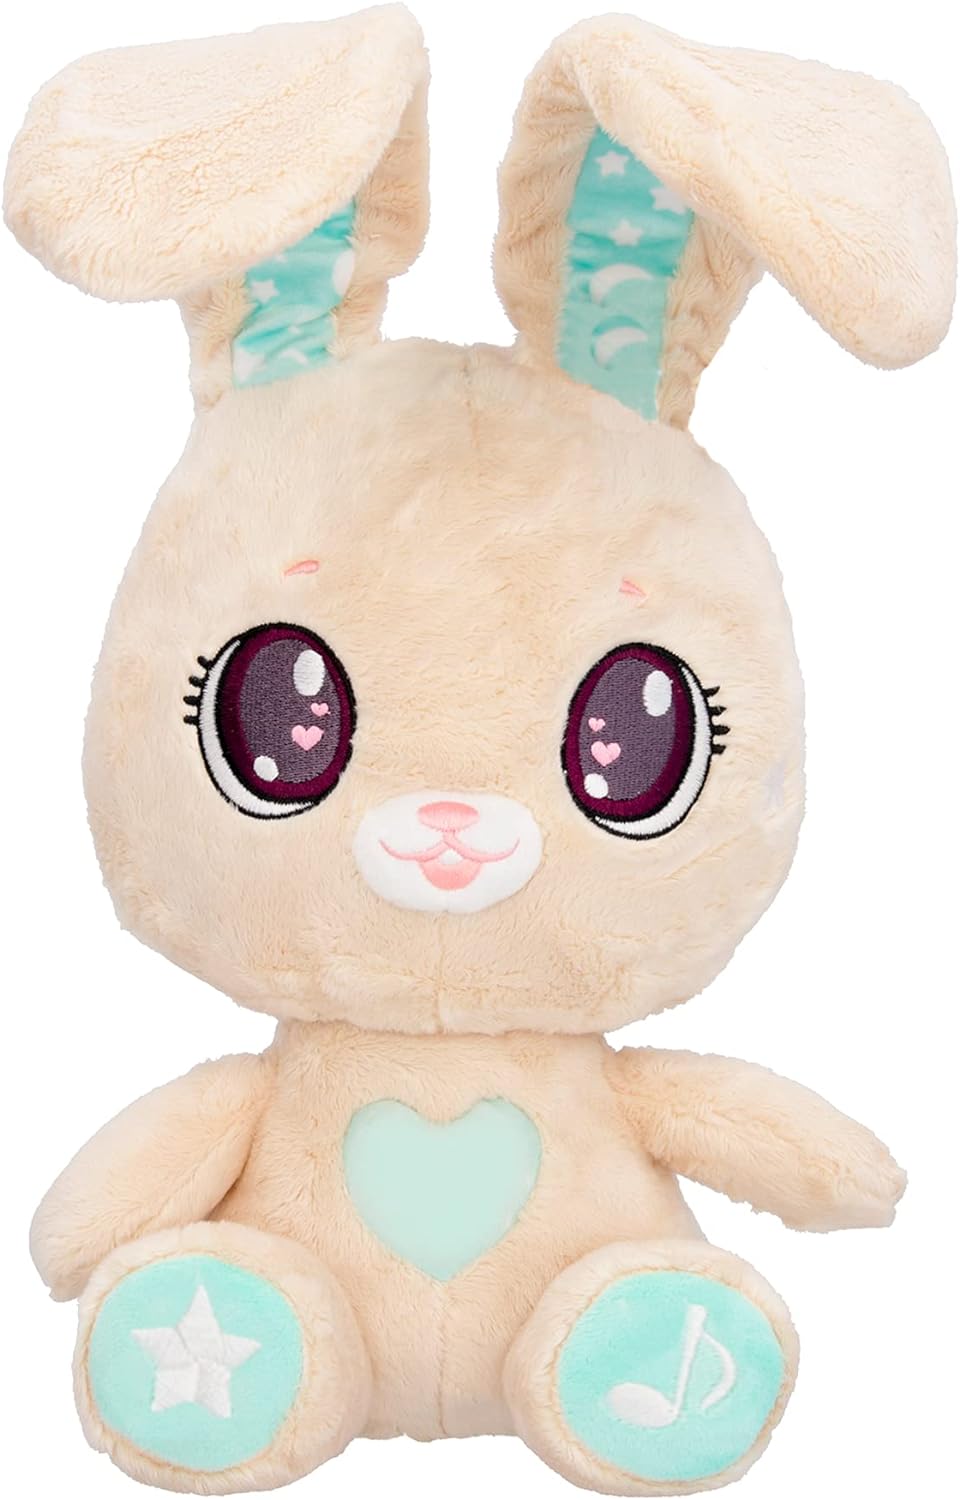 Peek-A-Boo Interactive Bunny - Peekaboo Stuffed Animal,Plush Doll - Grea t Gift for Kids Ages 1-3